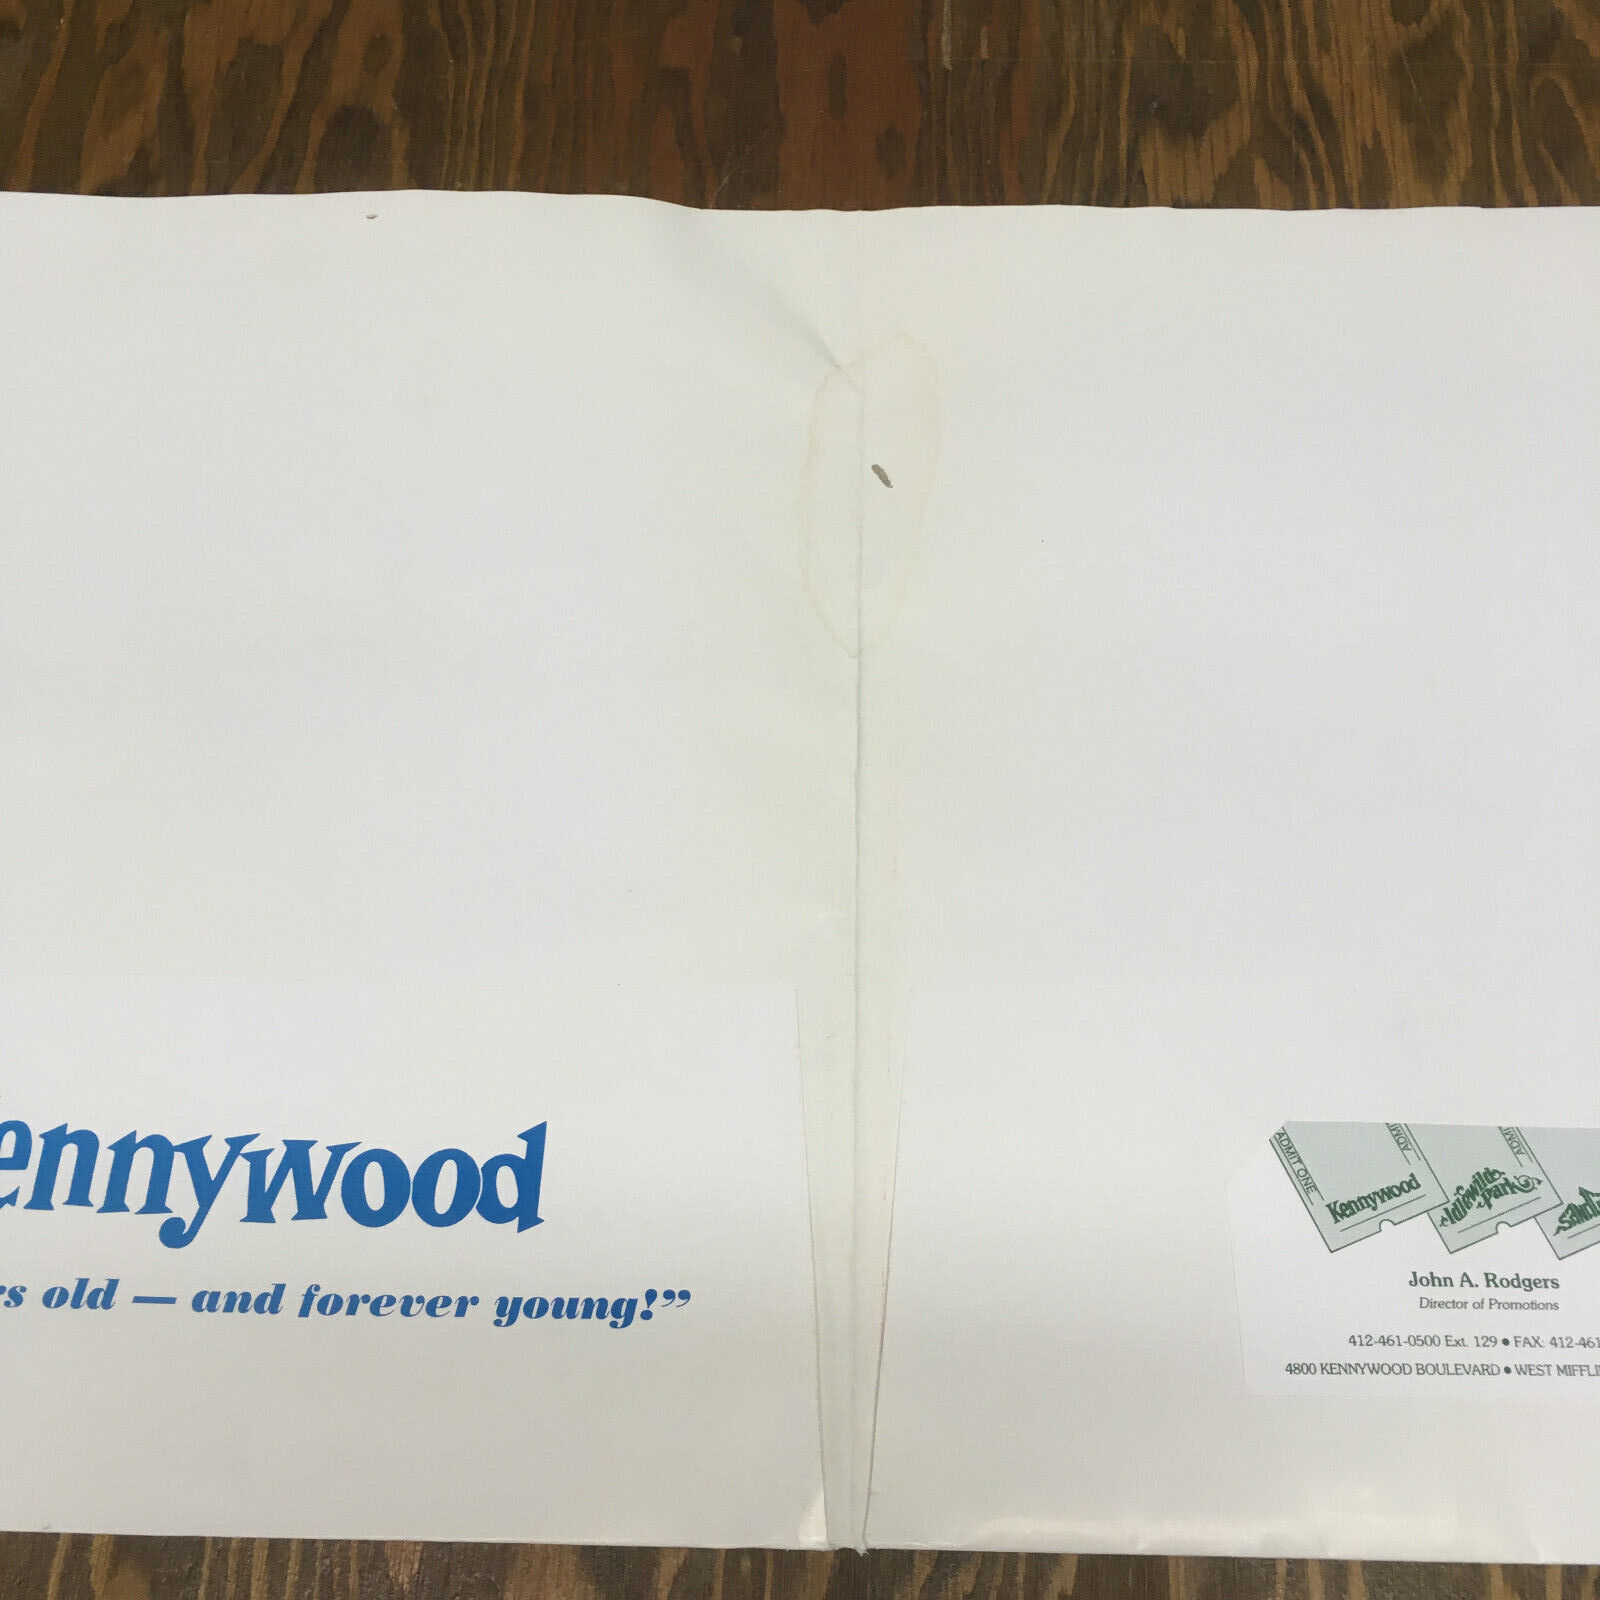 Kennywood 100 years of fun promo advertising folder with sandcastle brochure